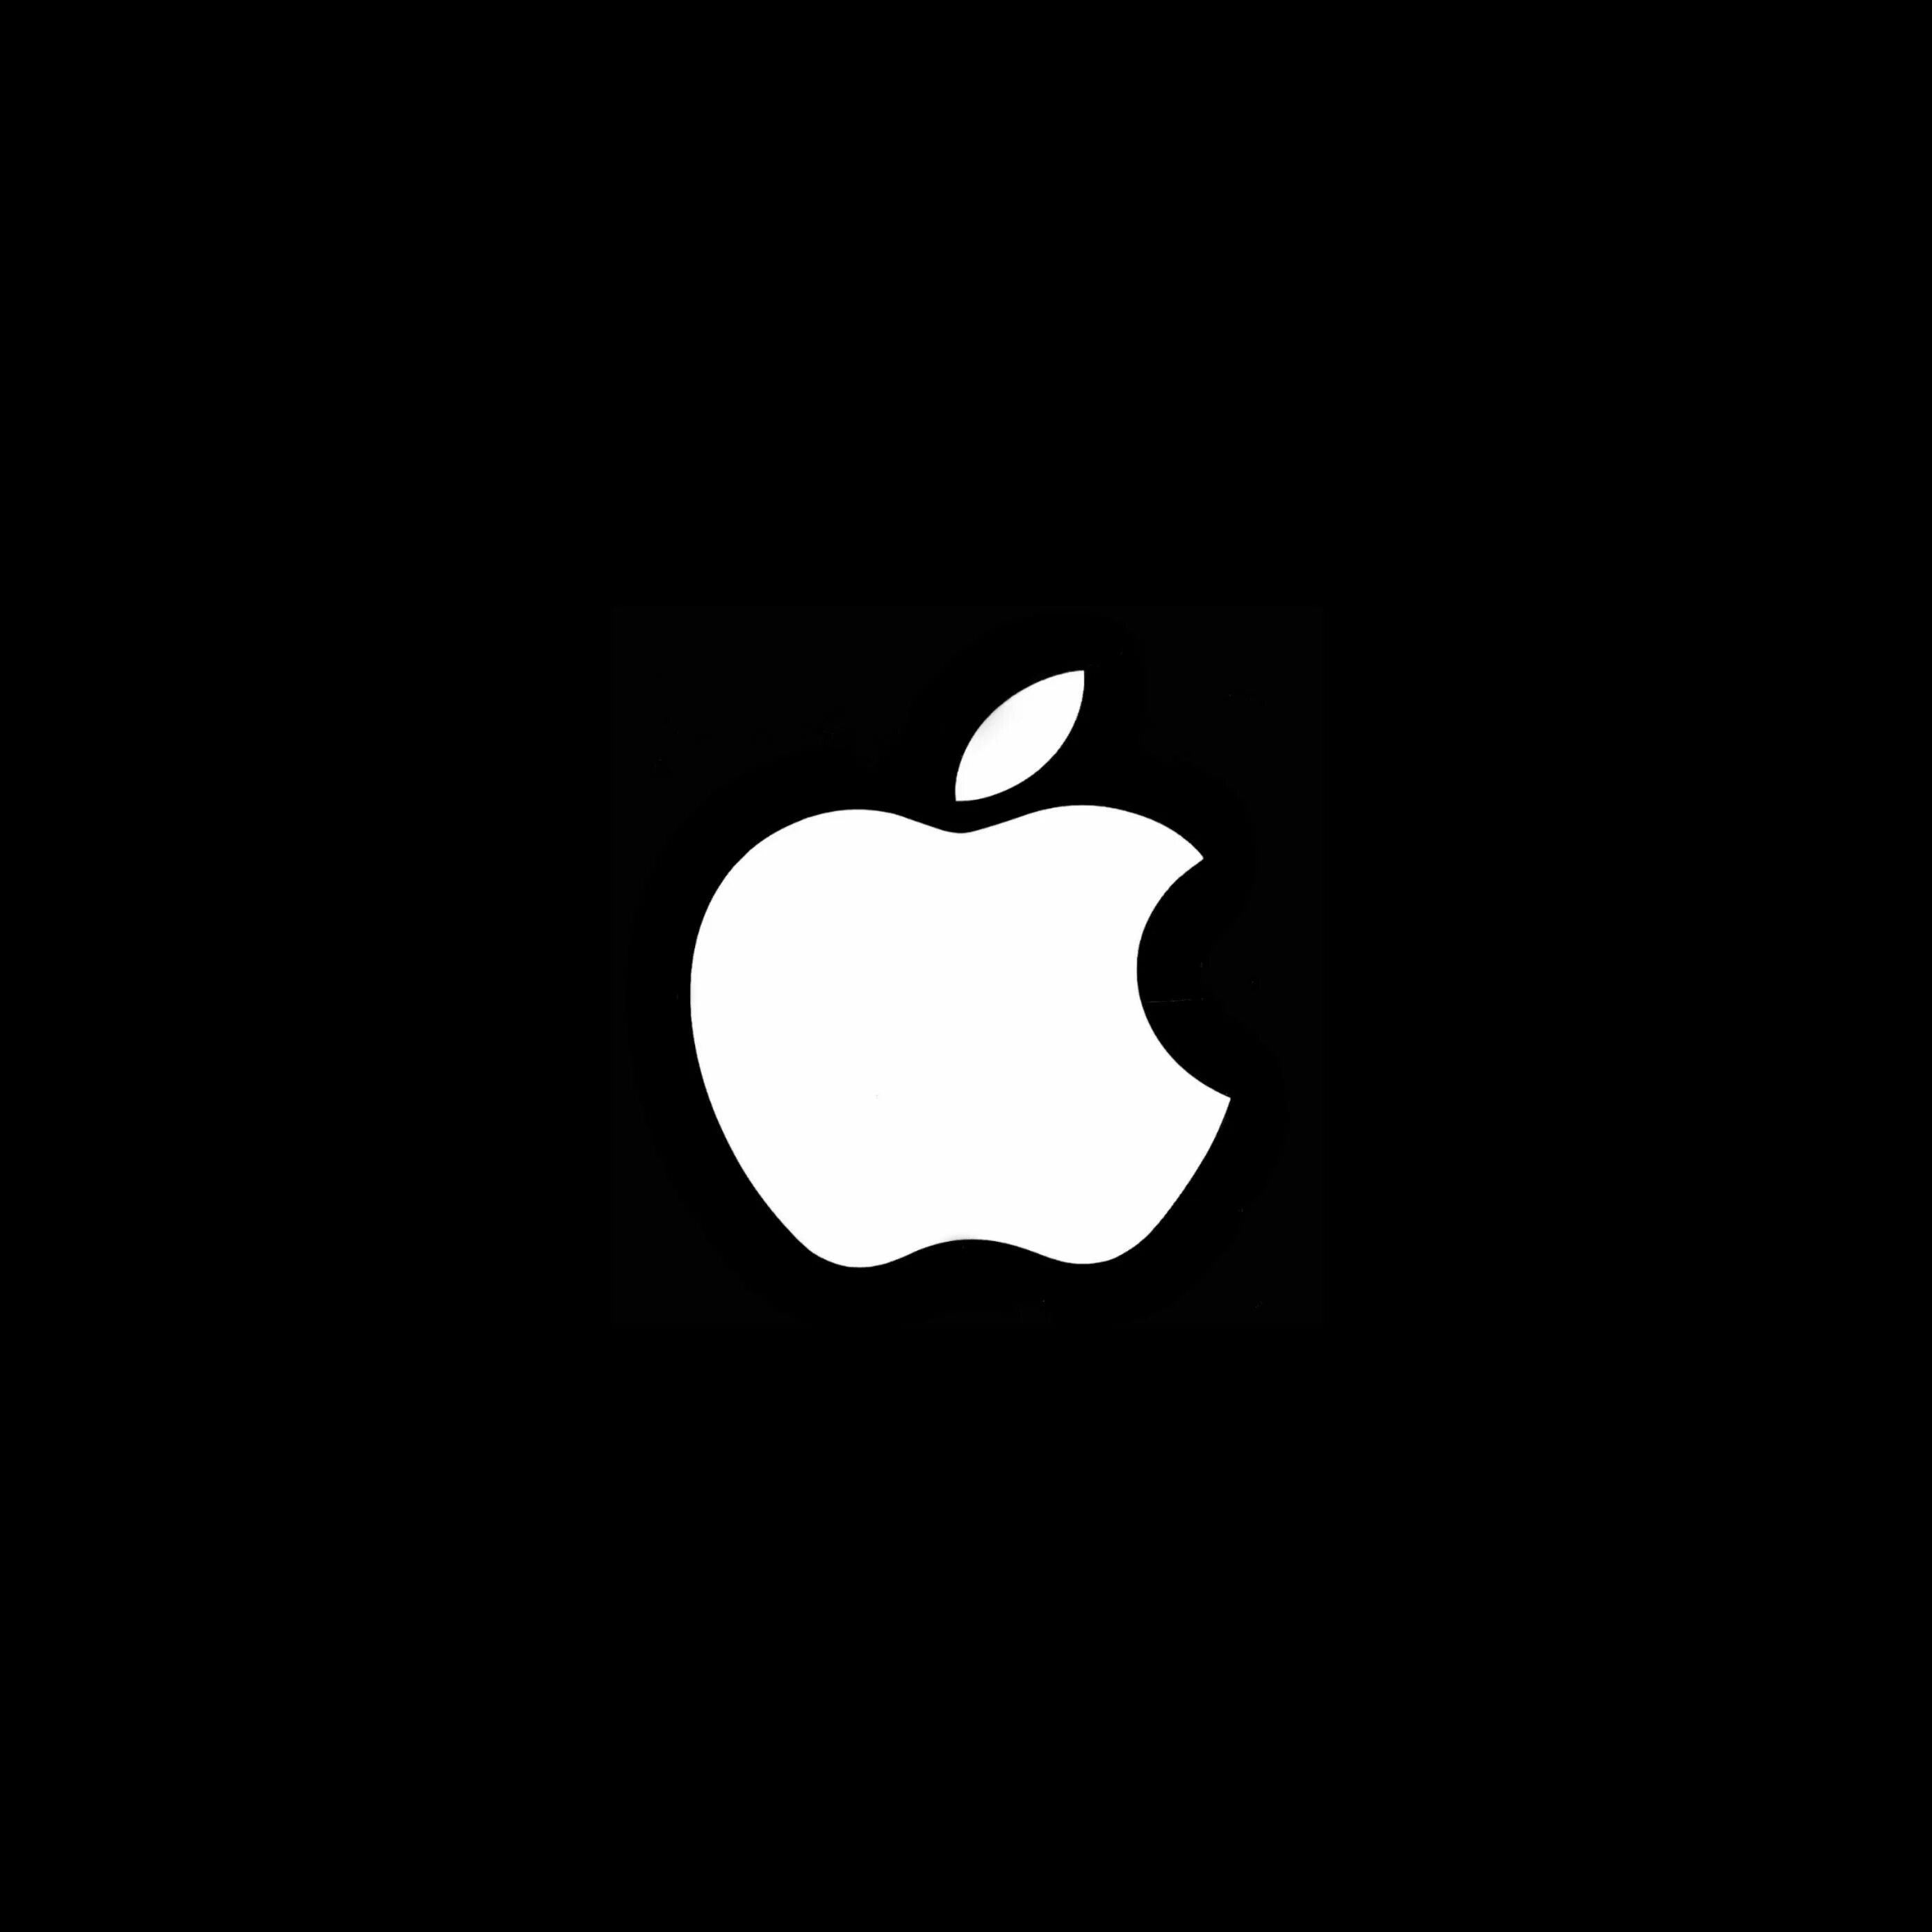 Иконка на обои телефона. Эпл лого. Эпл яблоко айфон. Логотип Эппл черный. Заставка эпл.